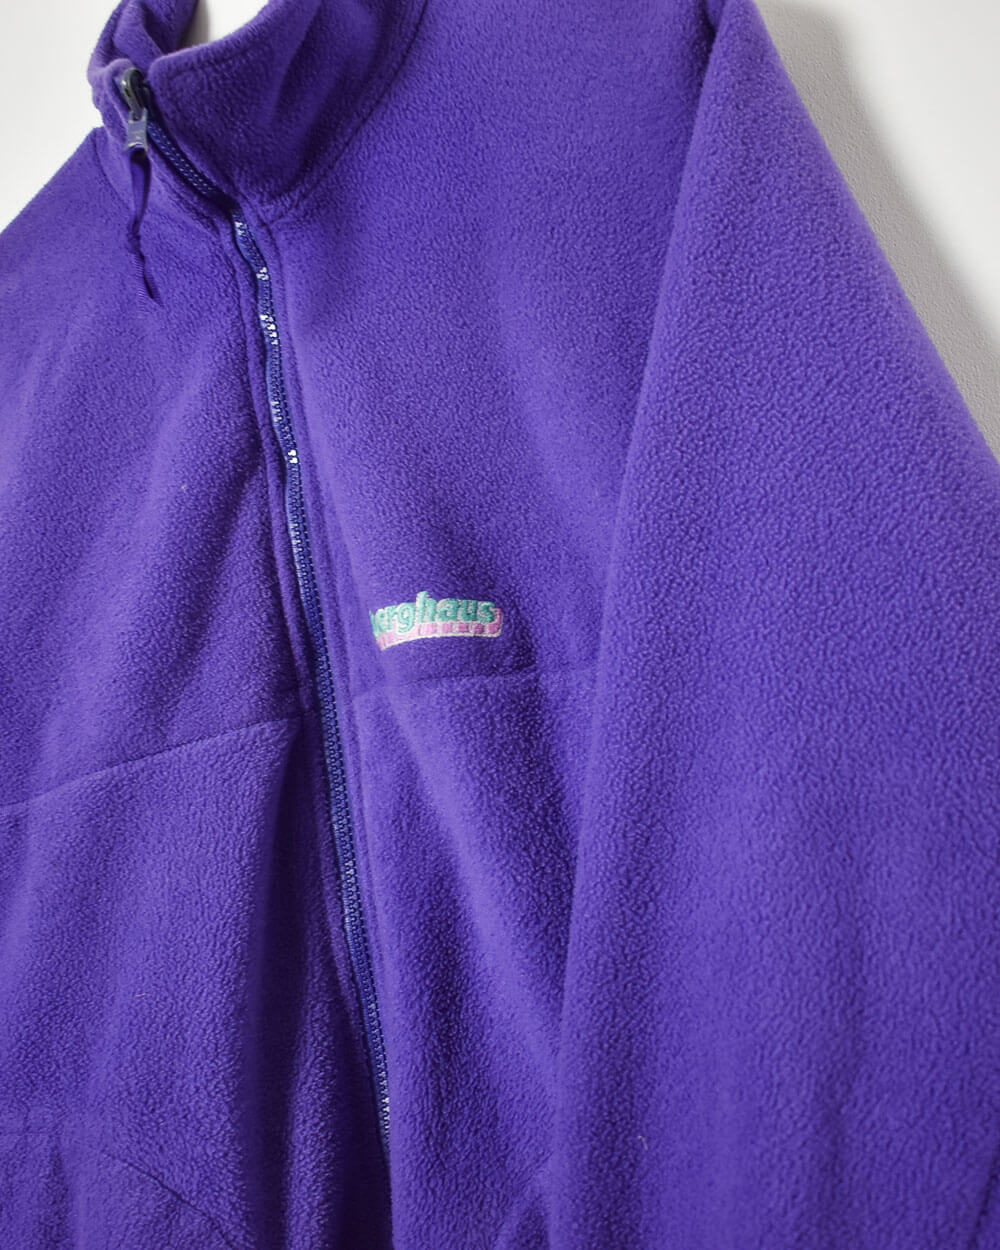 Purple Berghaus Zip-Through Fleece - Medium